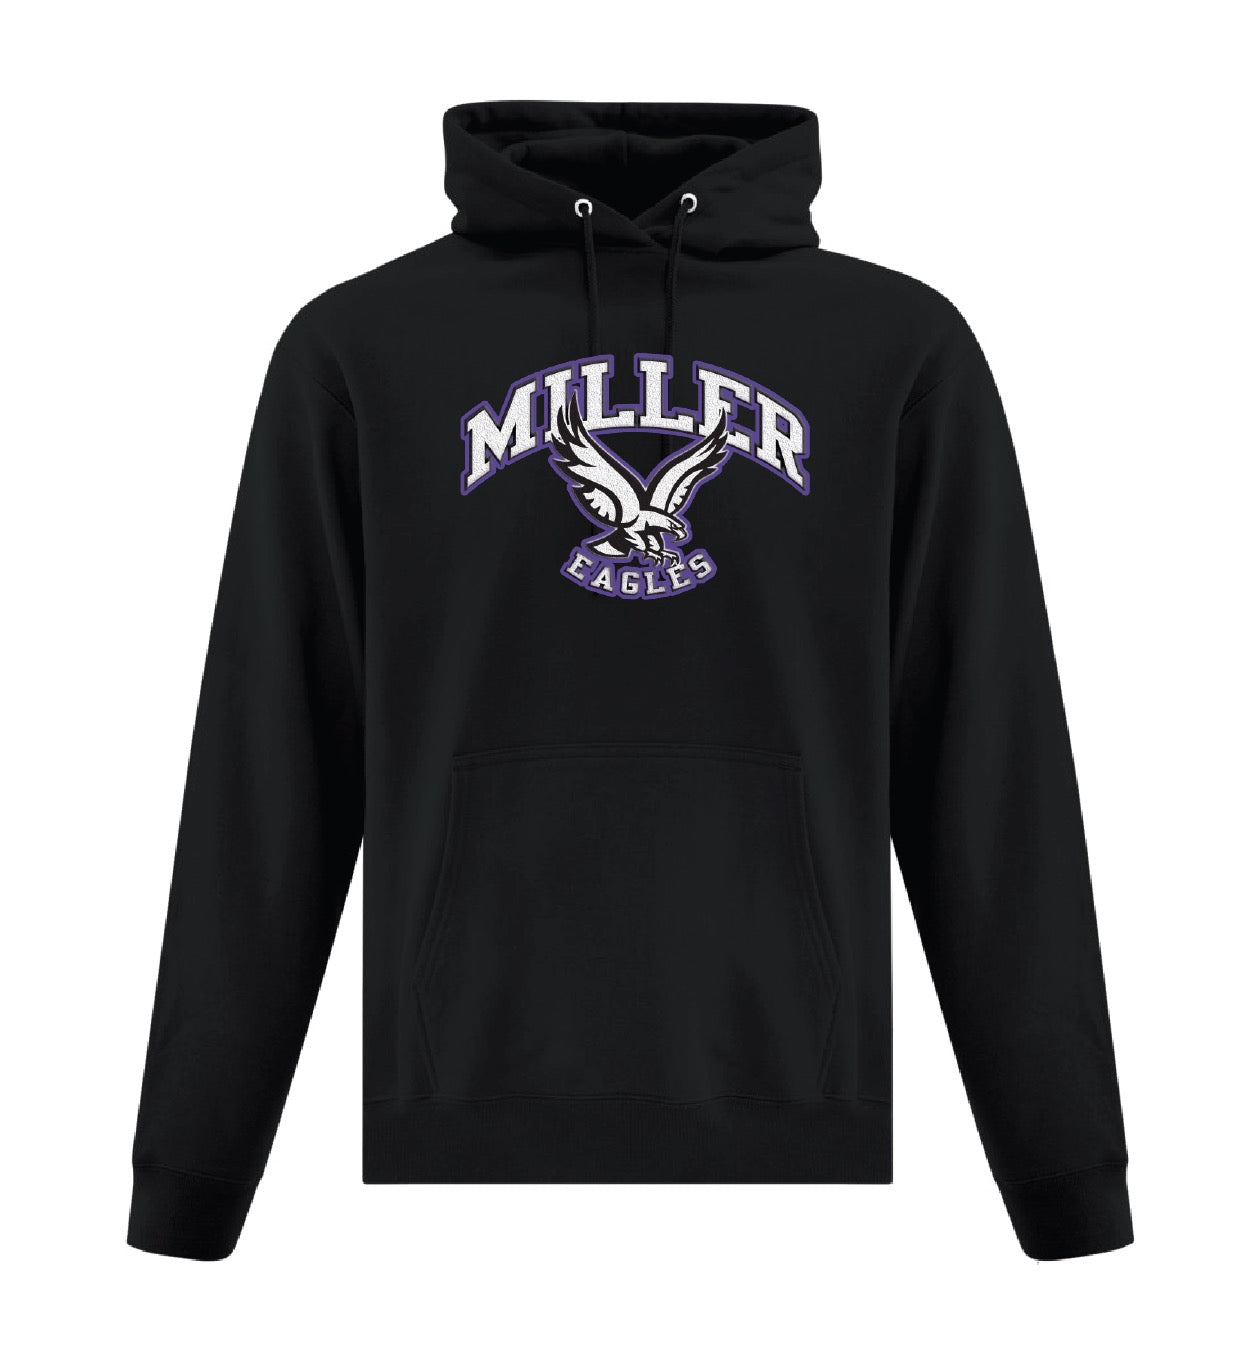 Youth "Miller Spirit Wear" Hoodie